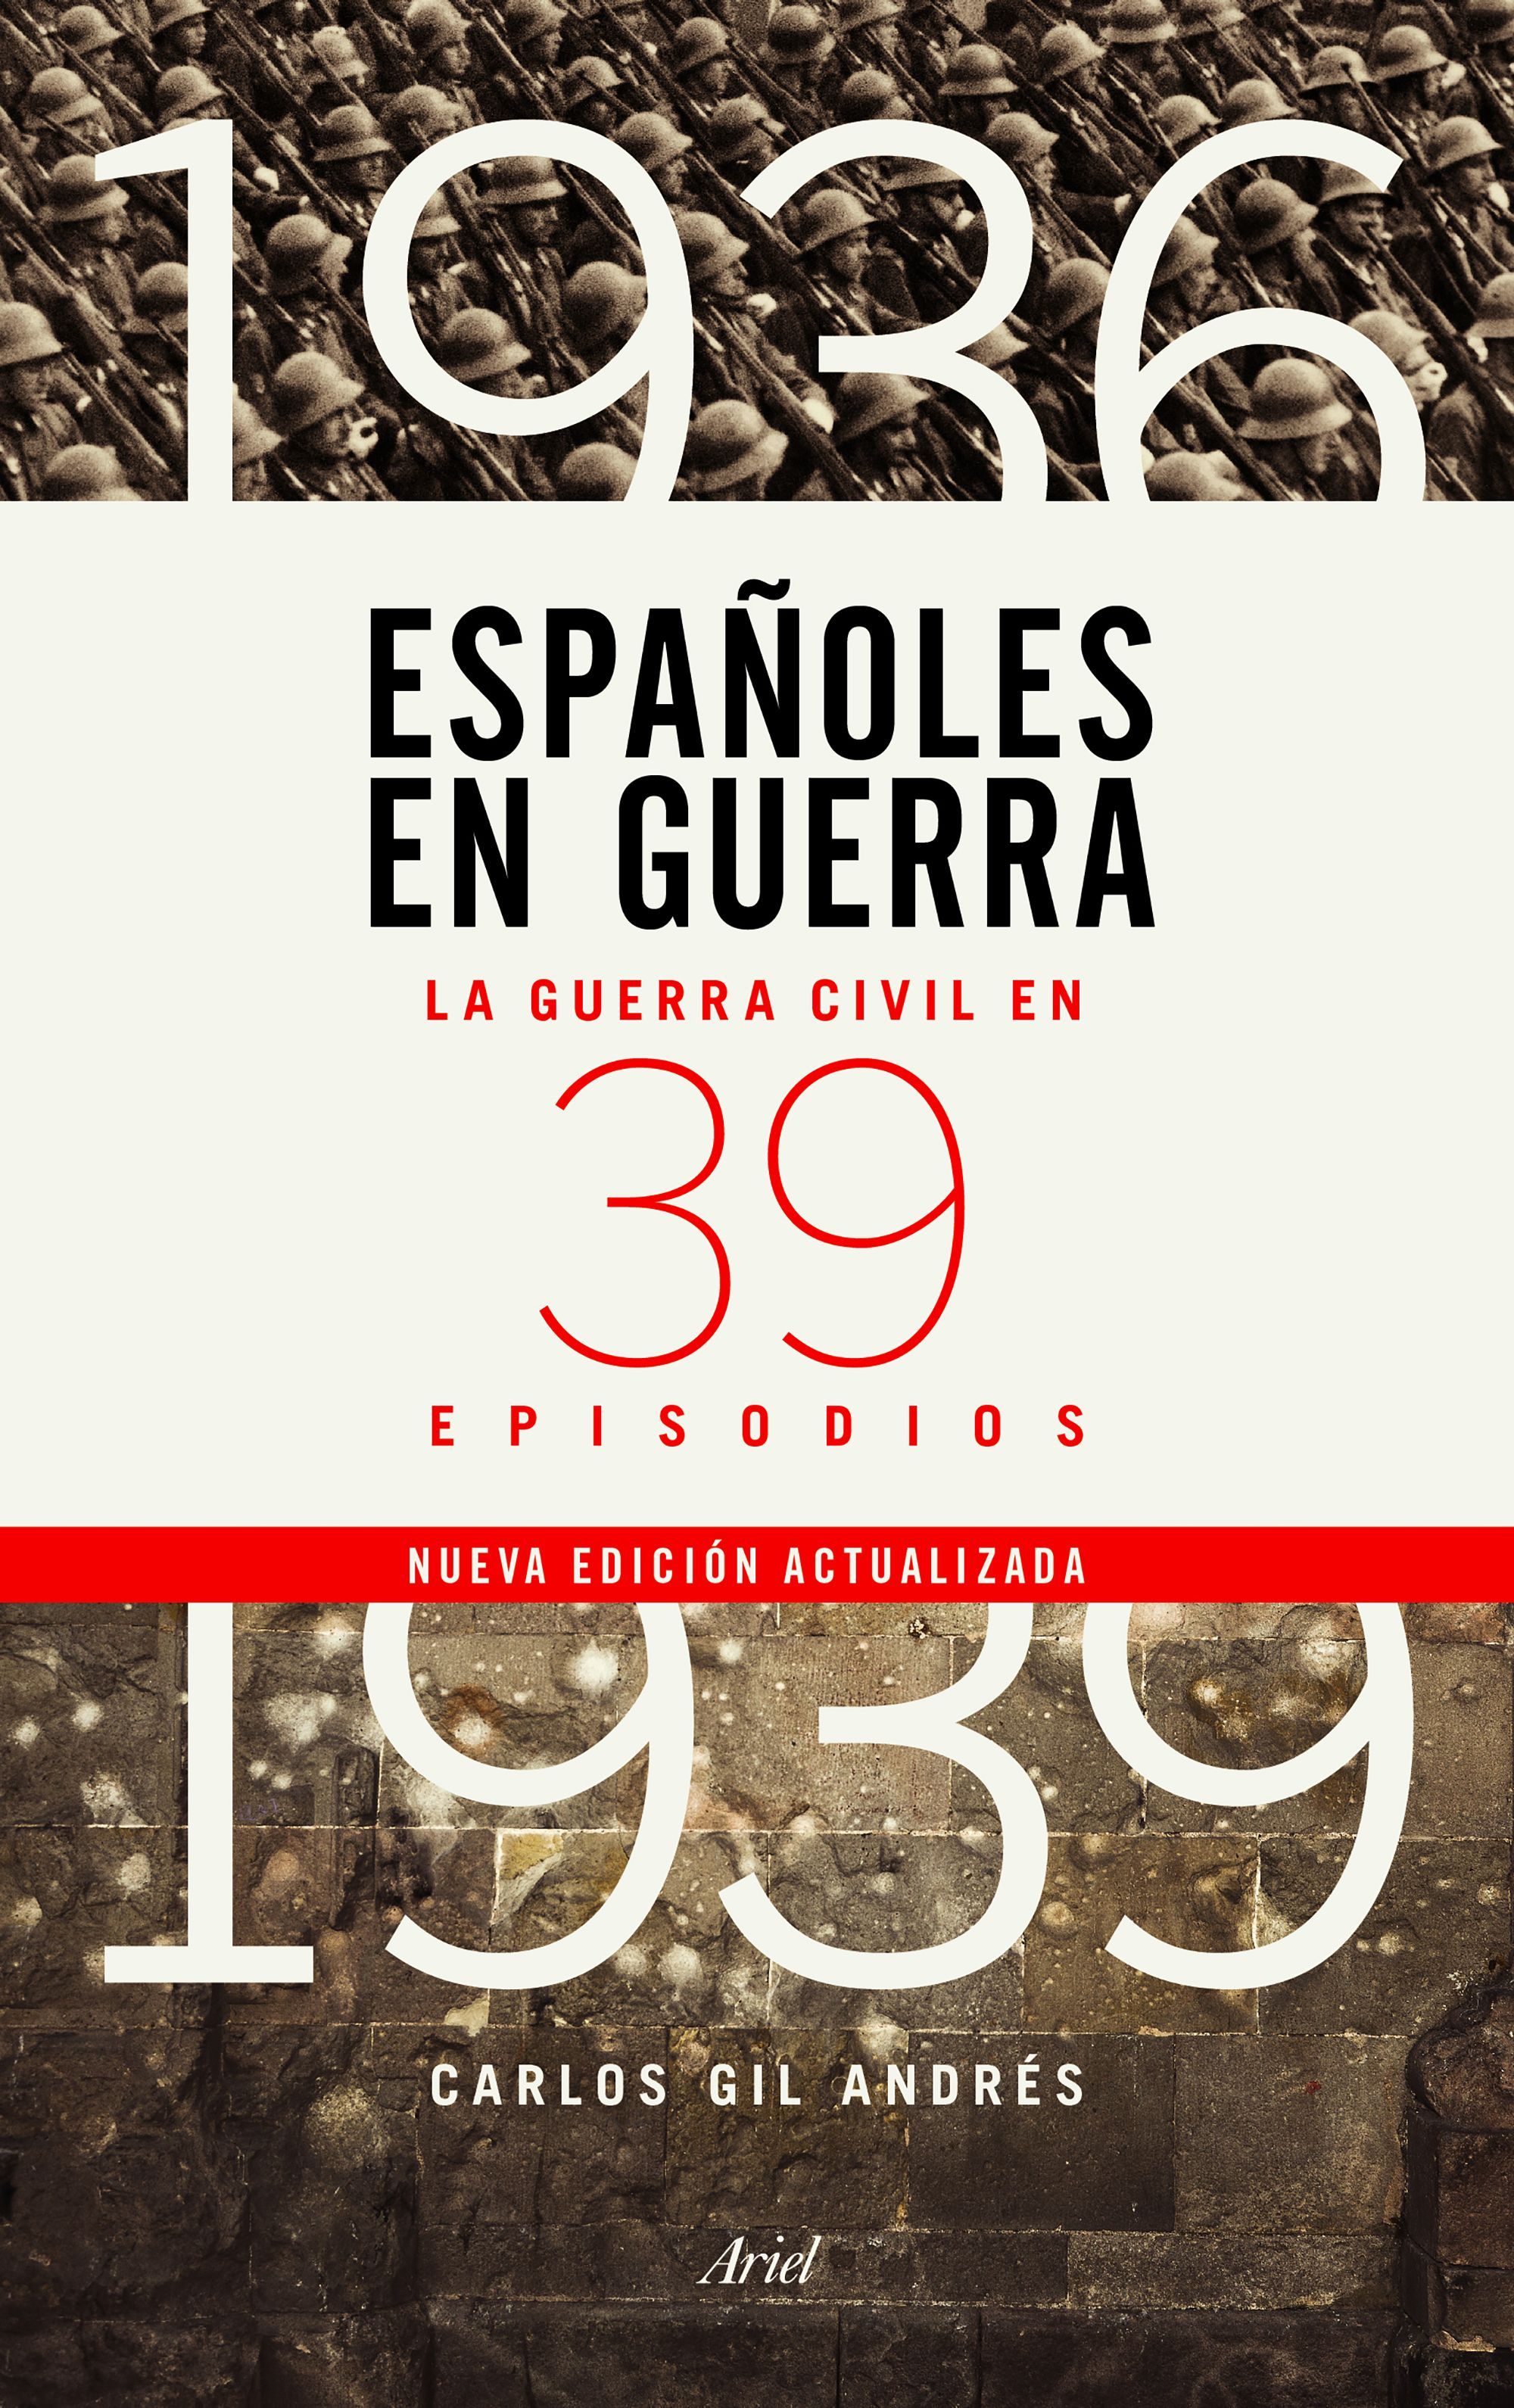 ESPAÑOLES EN GUERRA. LA GUERRA CIVIL EN 39 EPISODIOS